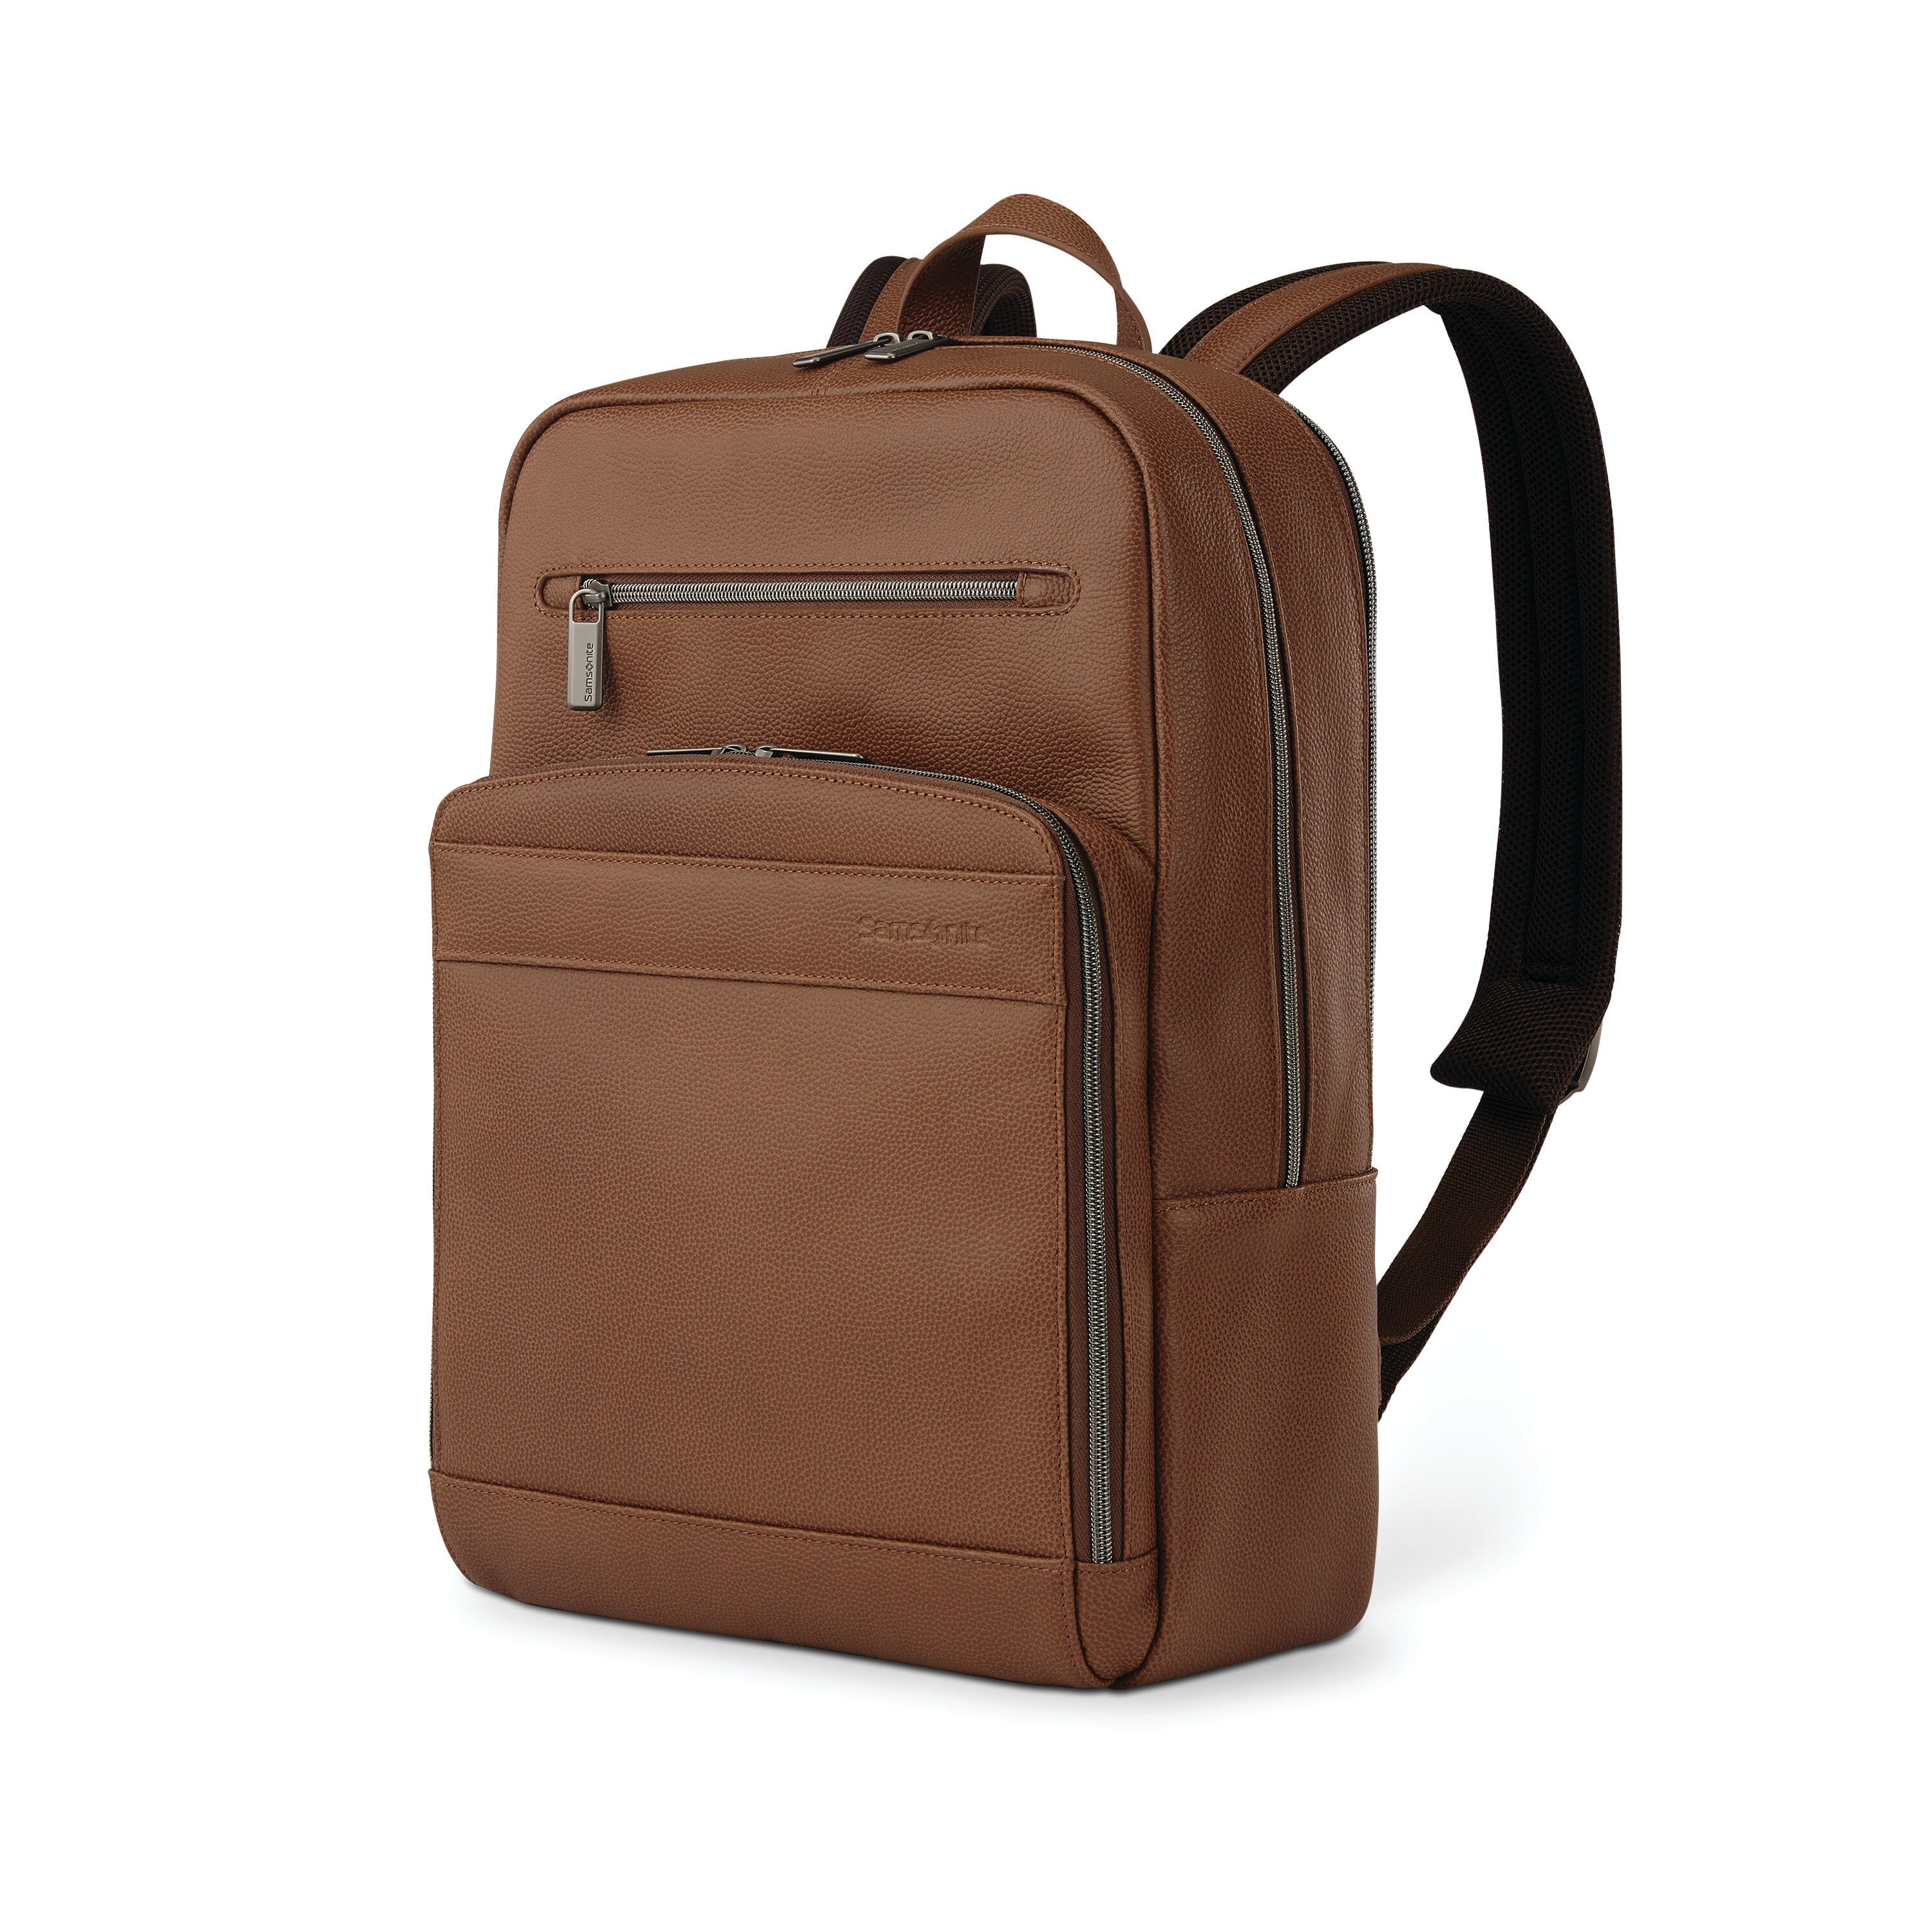 Buy Business Slim Leather Backpack for USD 99.99 | Samsonite US